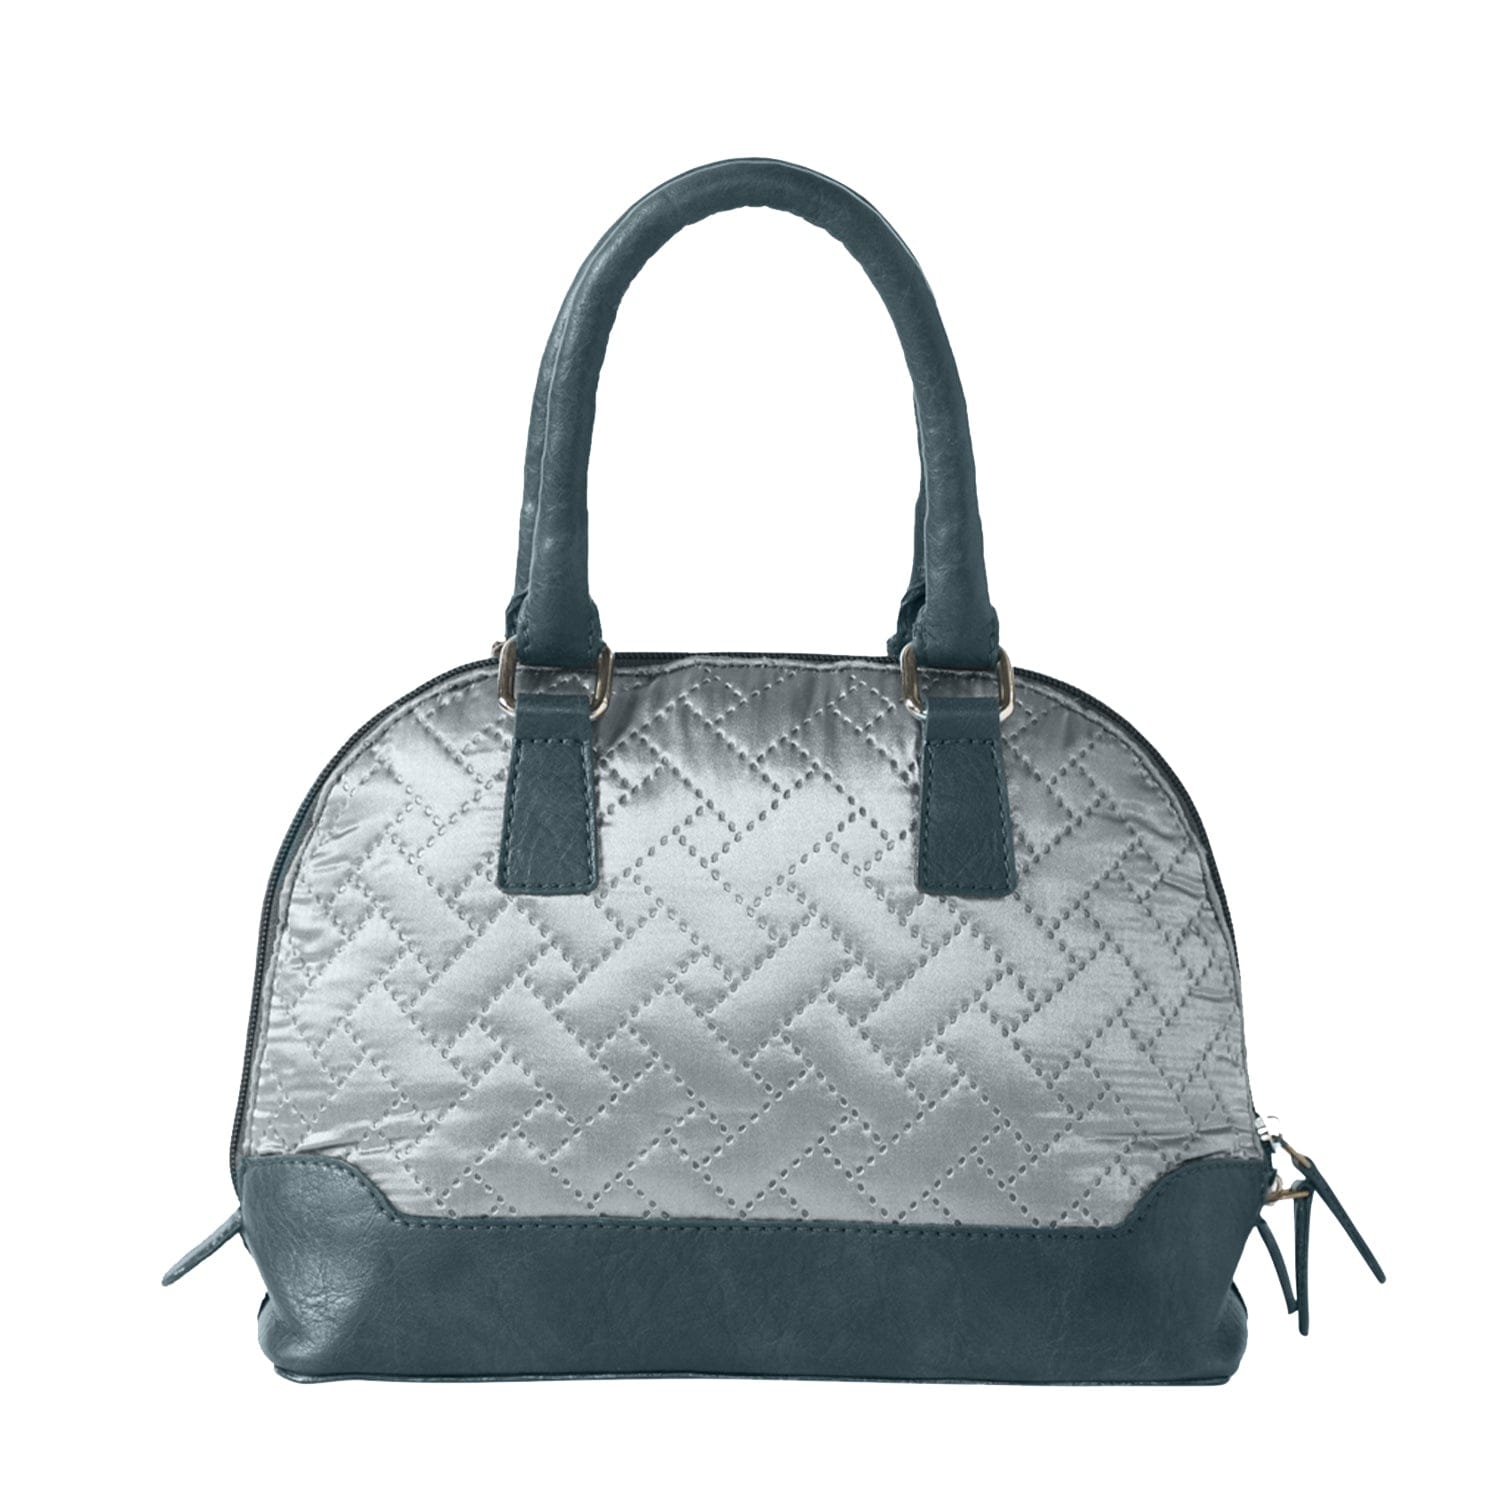 Mona B Small Handbag, Shoulder Bags For Shopping Travel With Stylish Design For Women: SEA - QRP-301 SEA - Handbag by Mona-B - Backpack, Flash Sale, Flat50, New Arrivals, Sale, Shop1999, Shop2999, Shop3999